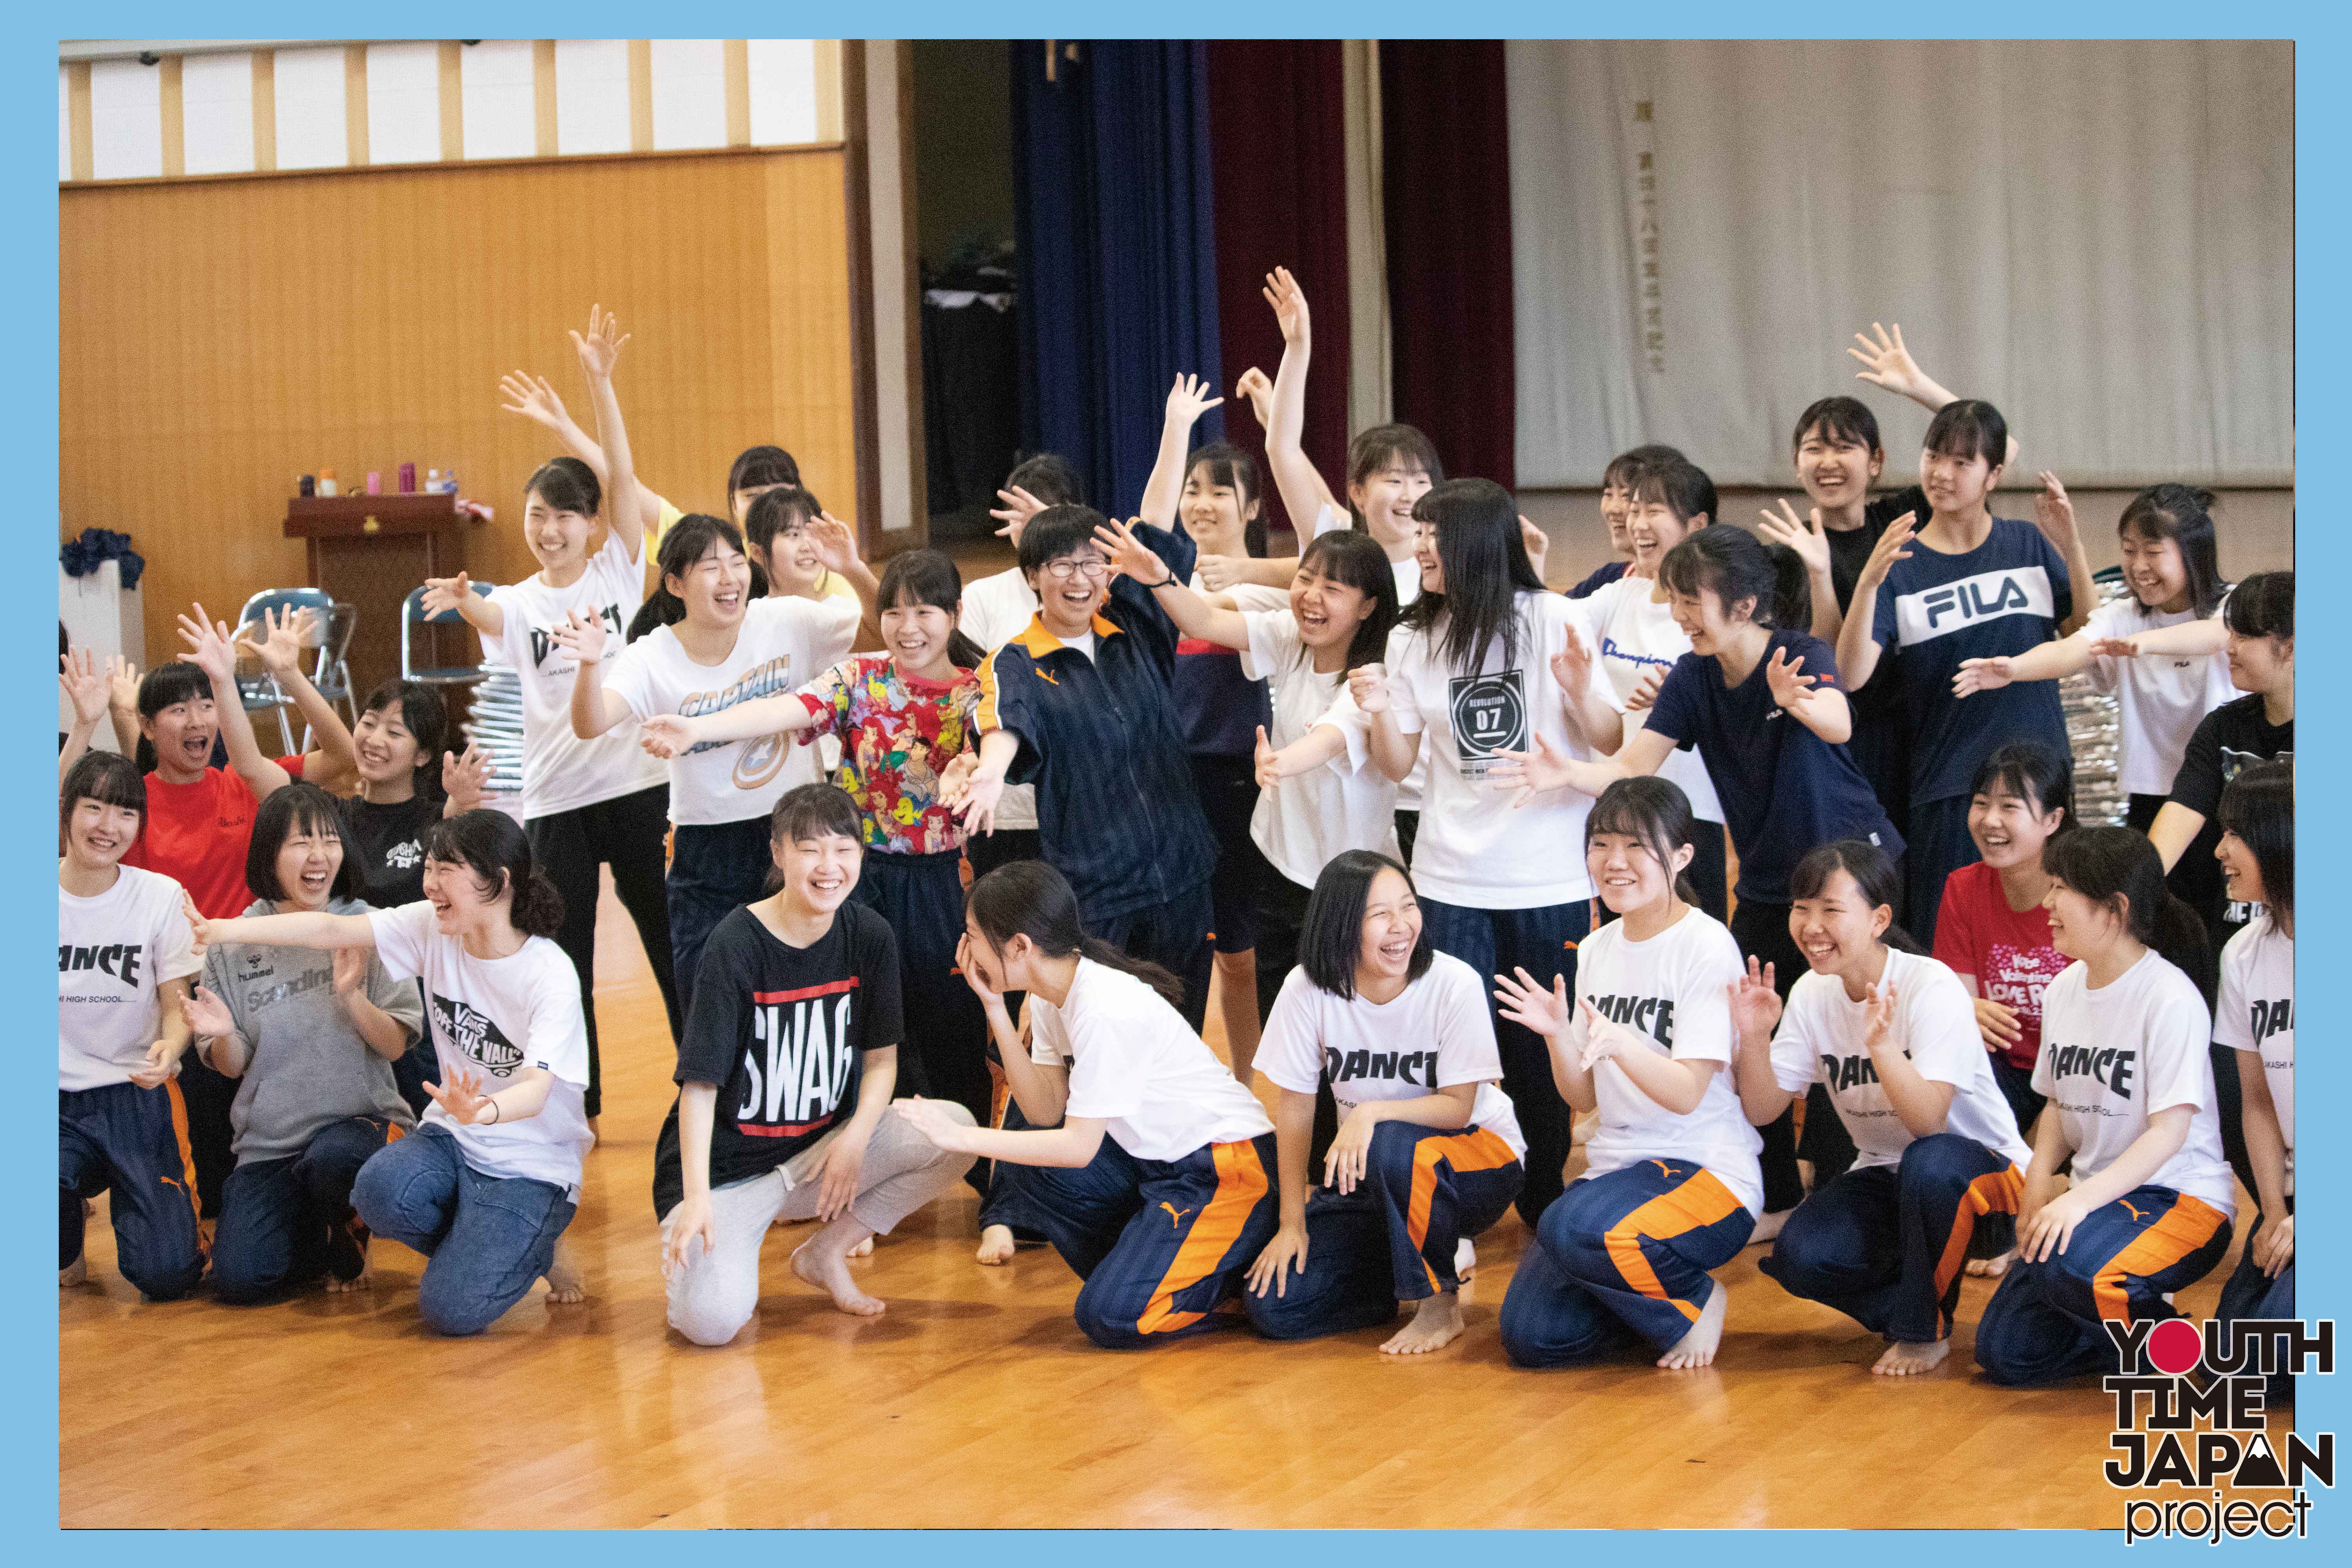 BUKATSU魂。Supported by MATCH　Season8 兵庫県立明石高等学校 ダンス部